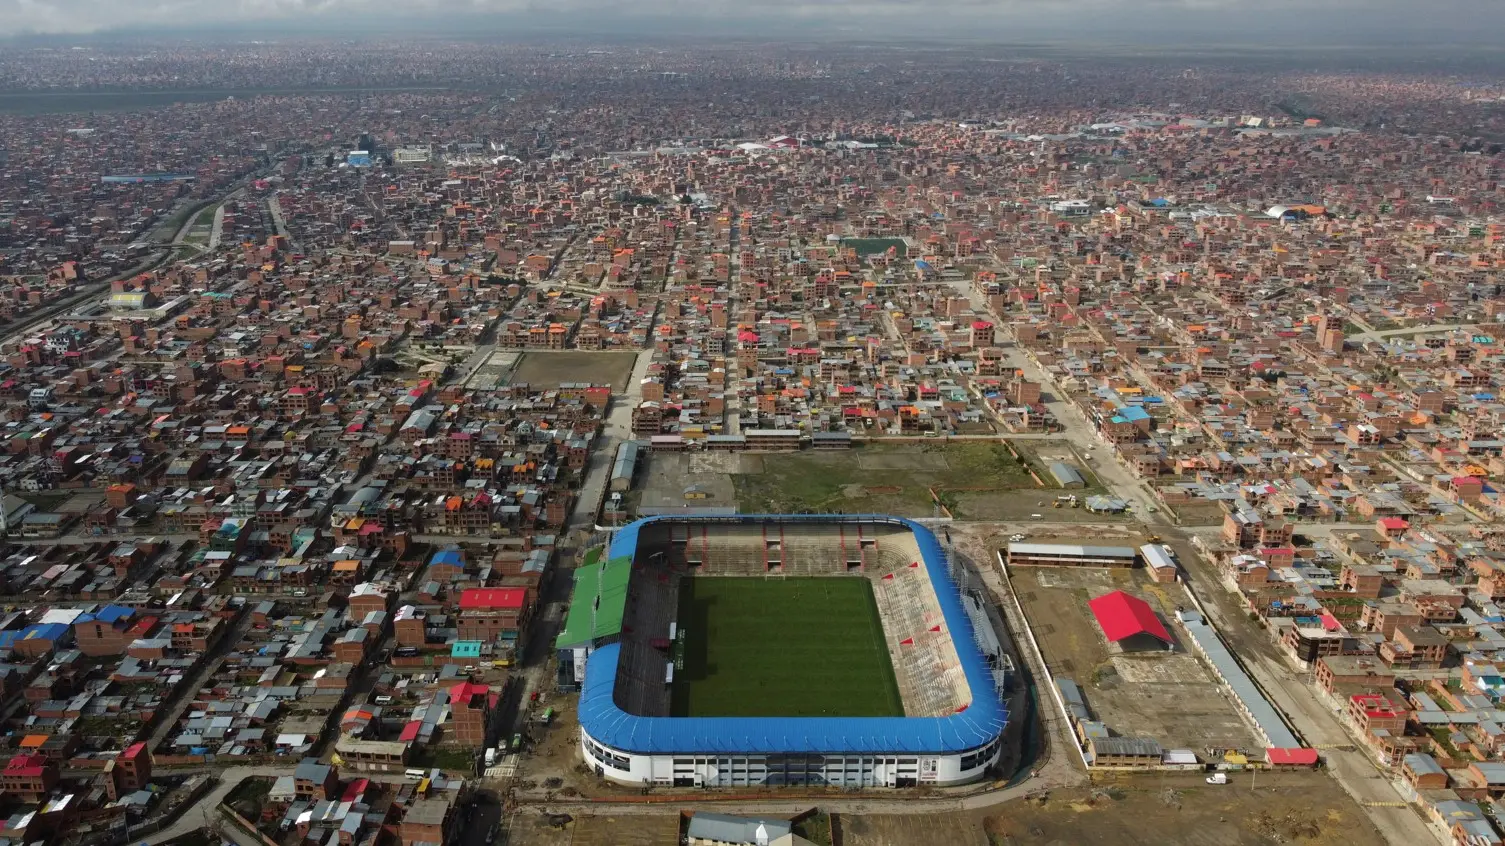 Villa Ingenio stadion ekvador reuters-65bcdb833adf2.webp